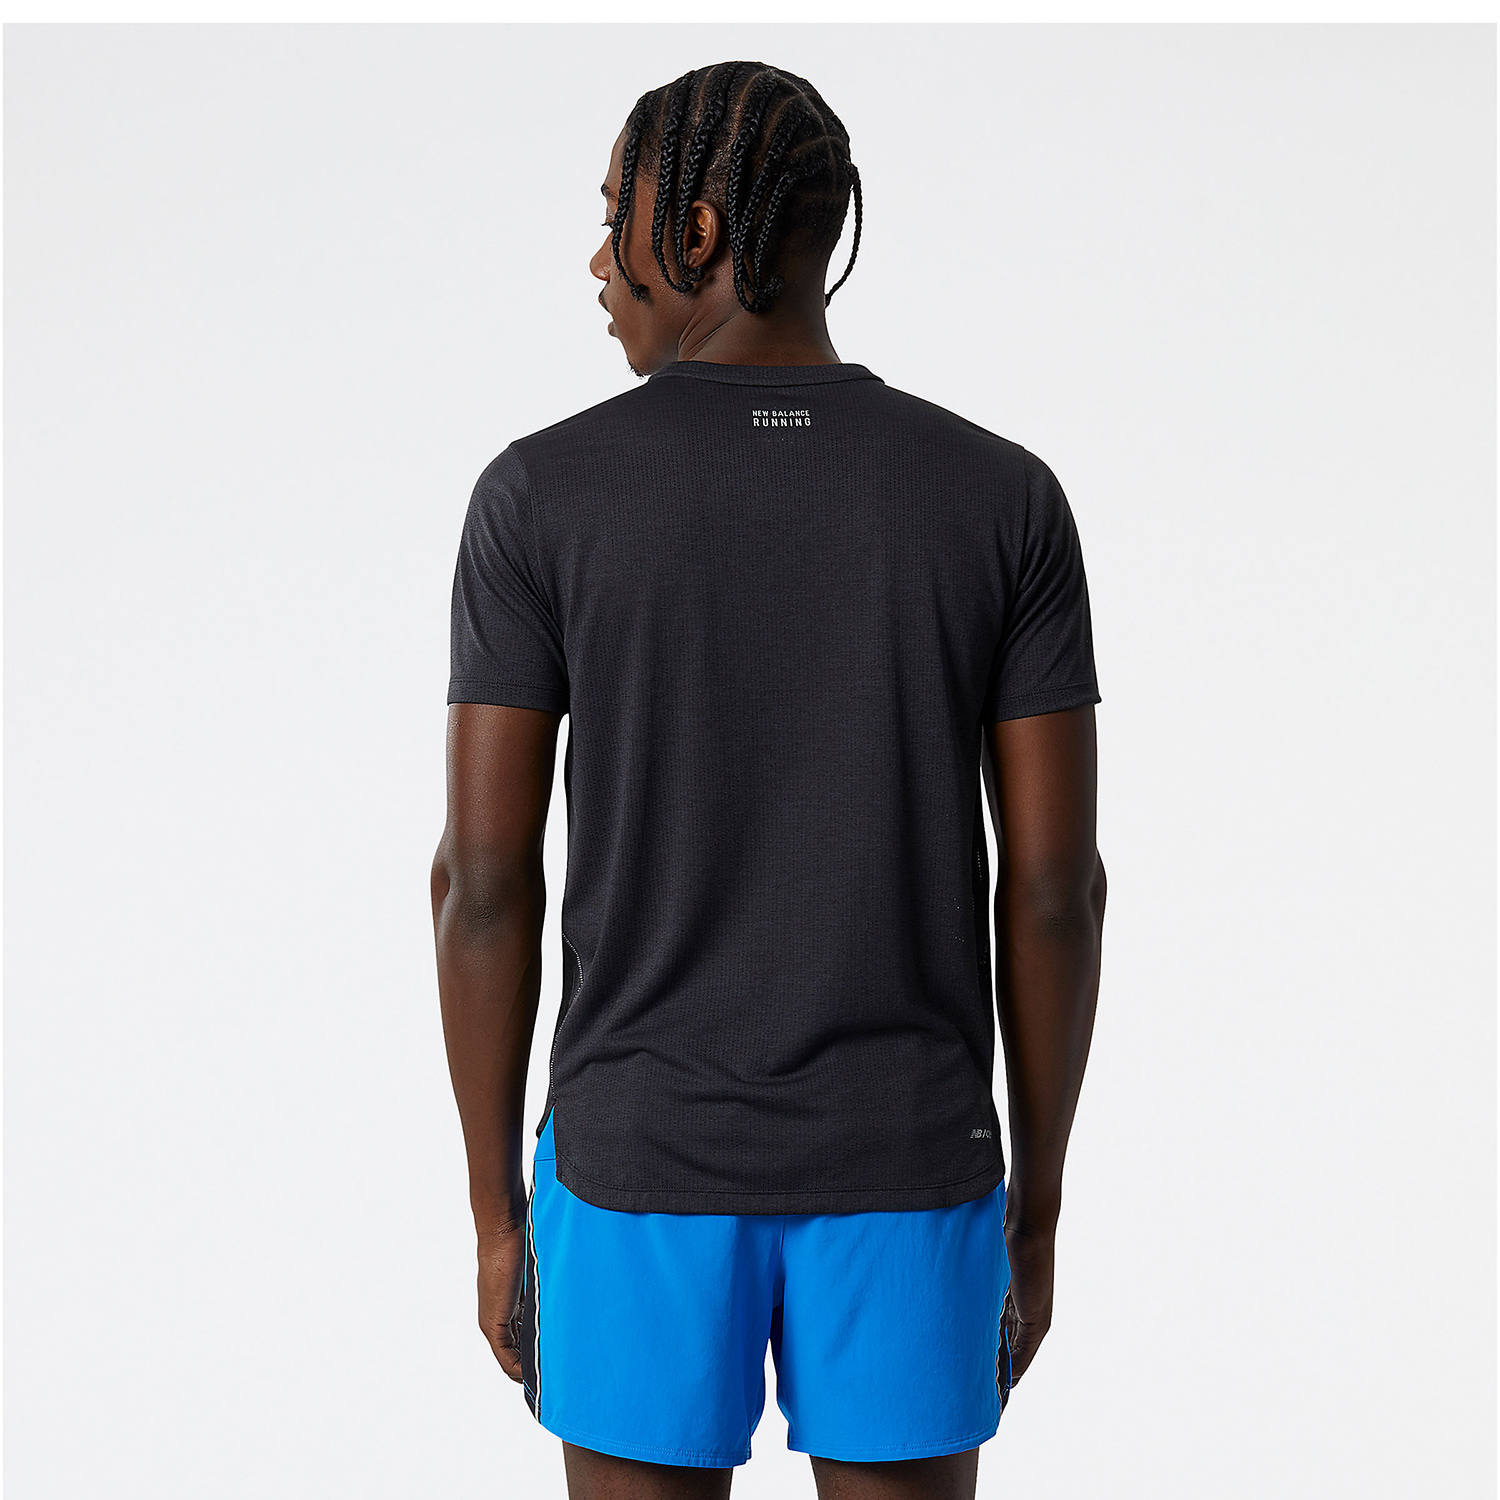 New Balance Impact Men's Running T-Shirt - Black